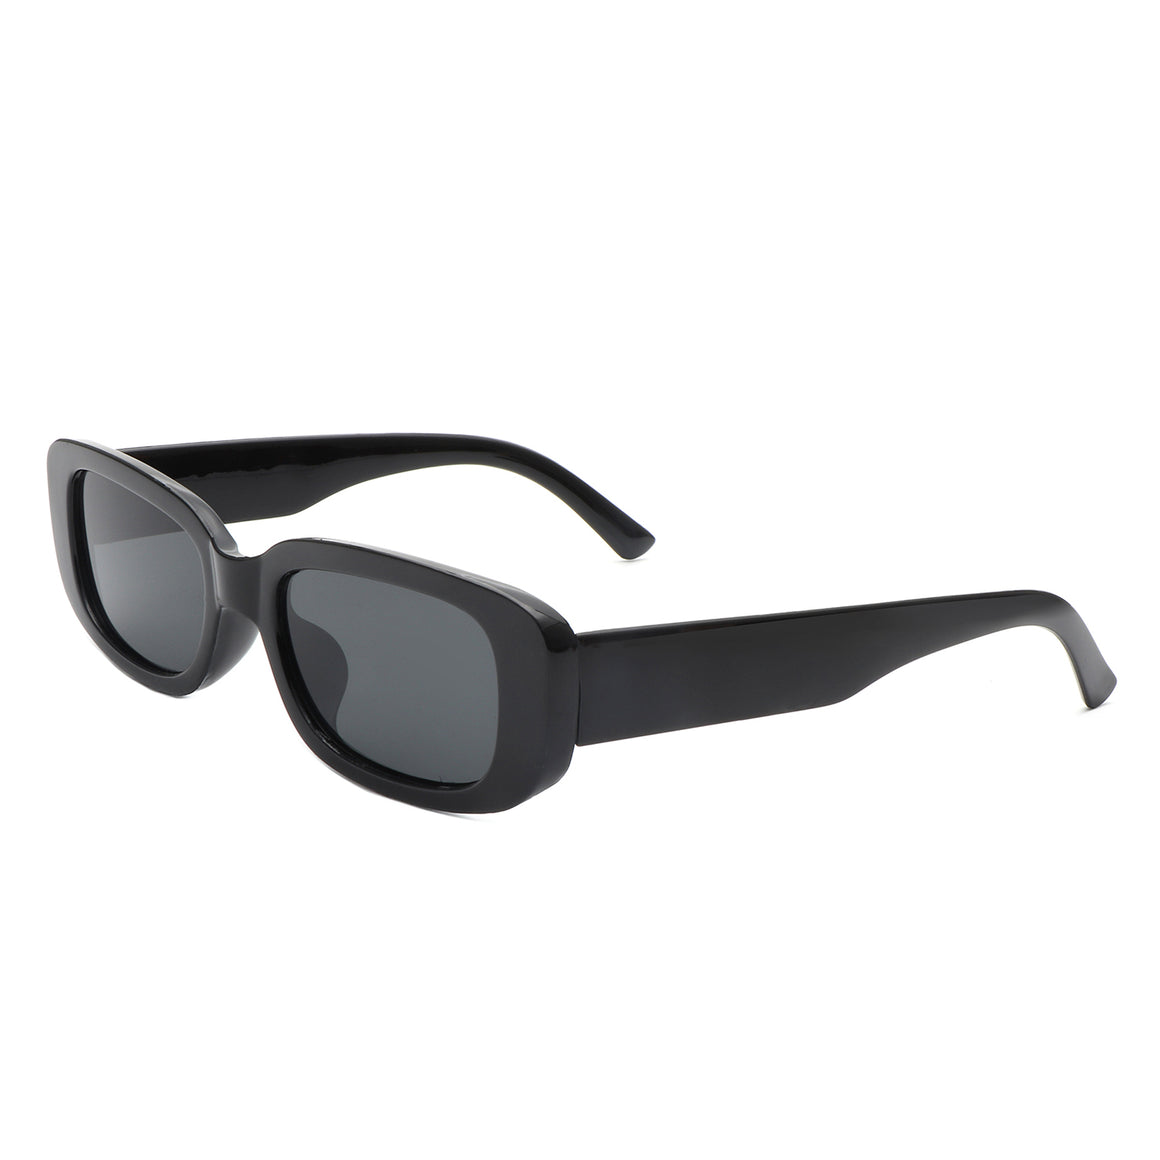 Alarica - Rectangle Retro Small Vintage Inspired Sunglasses